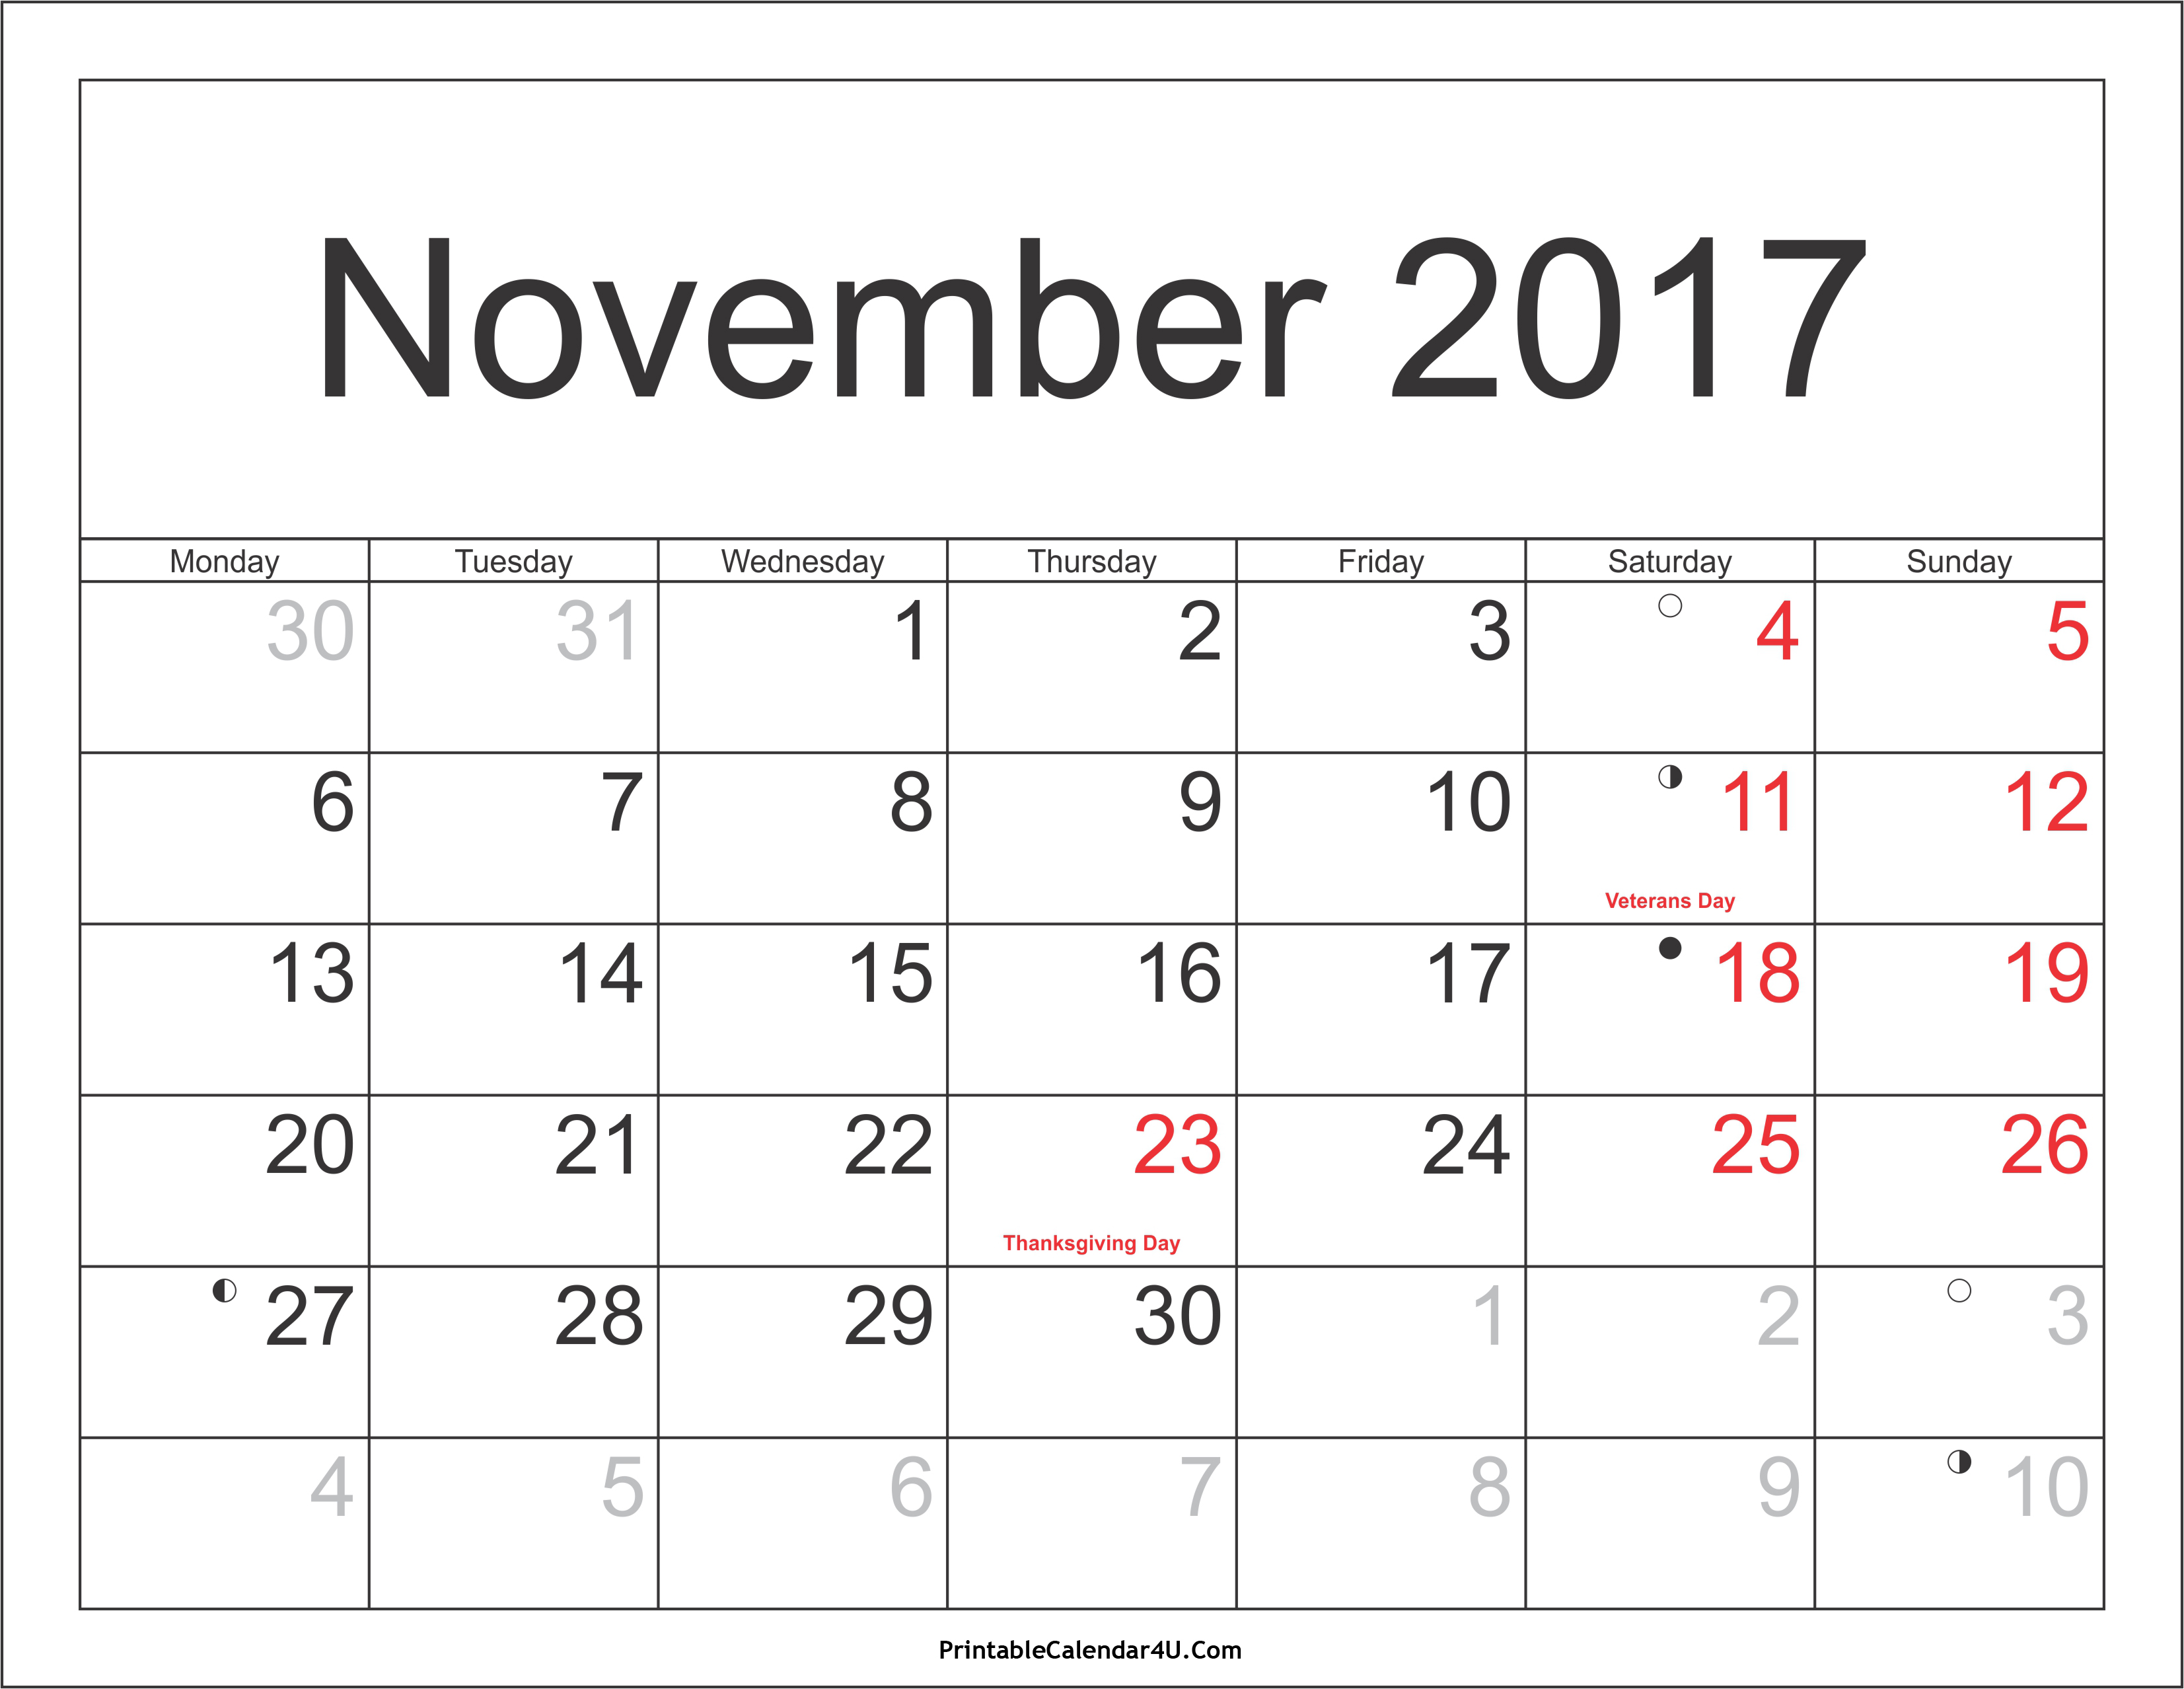 November 2017 Calendar Printable With Holidays | weekly calendar 